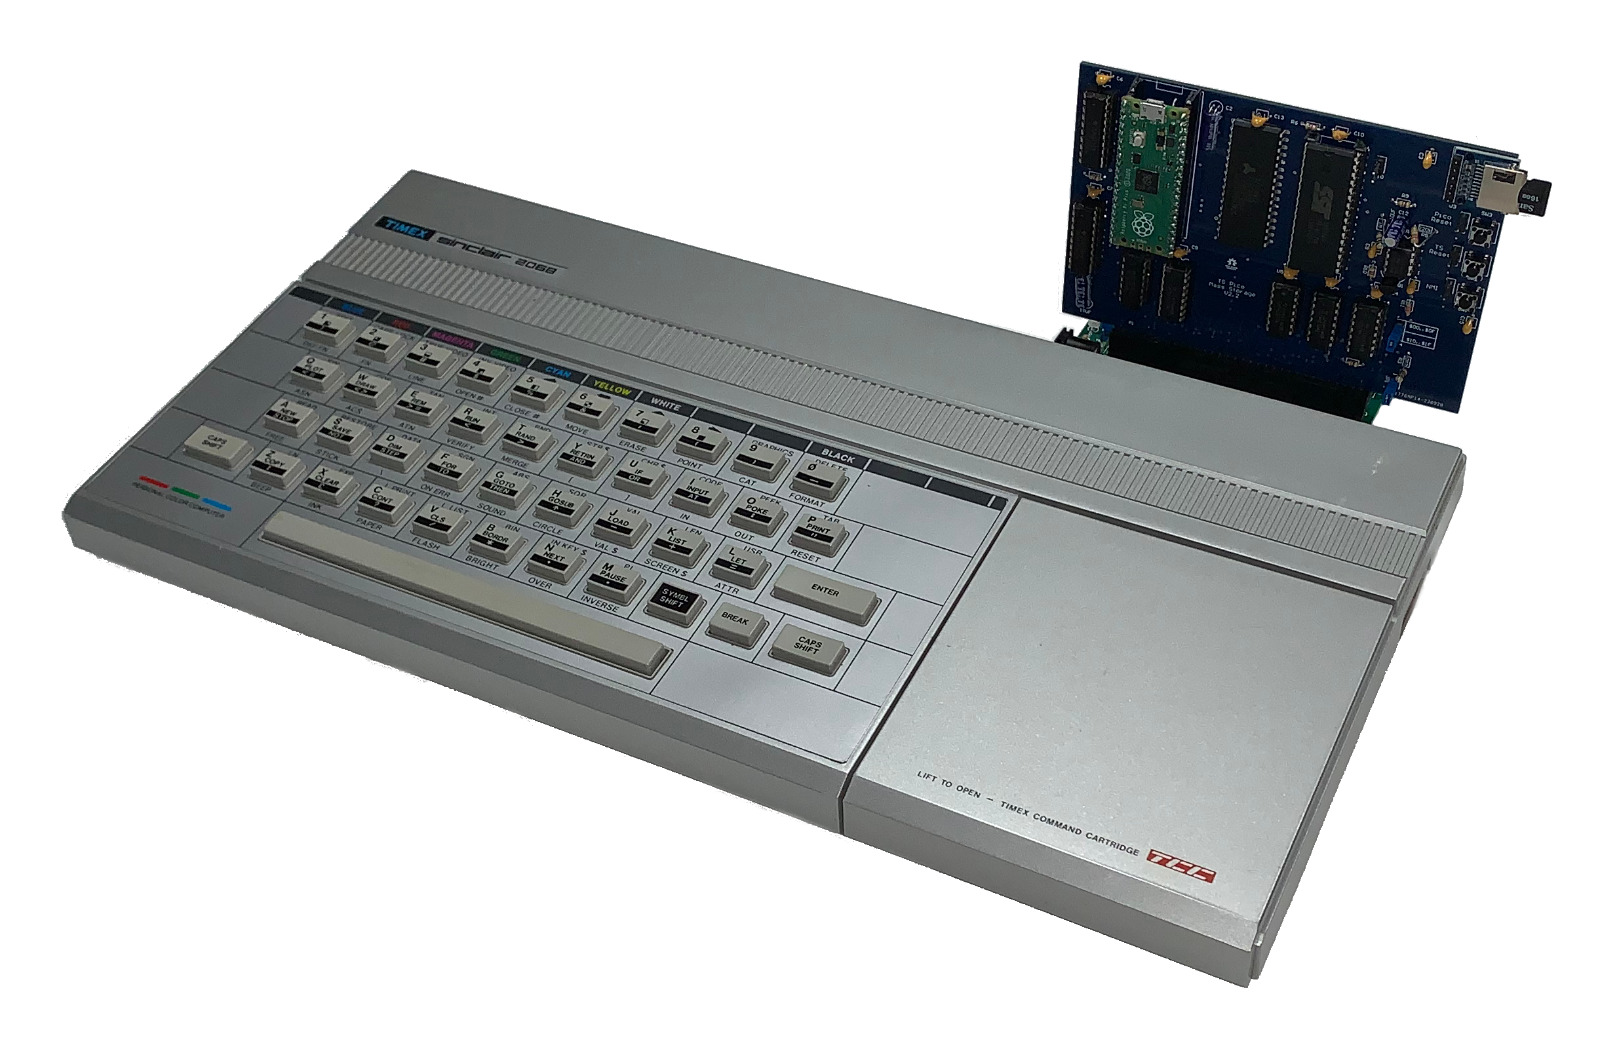 Timex Sinclair 2068 SD card storage system